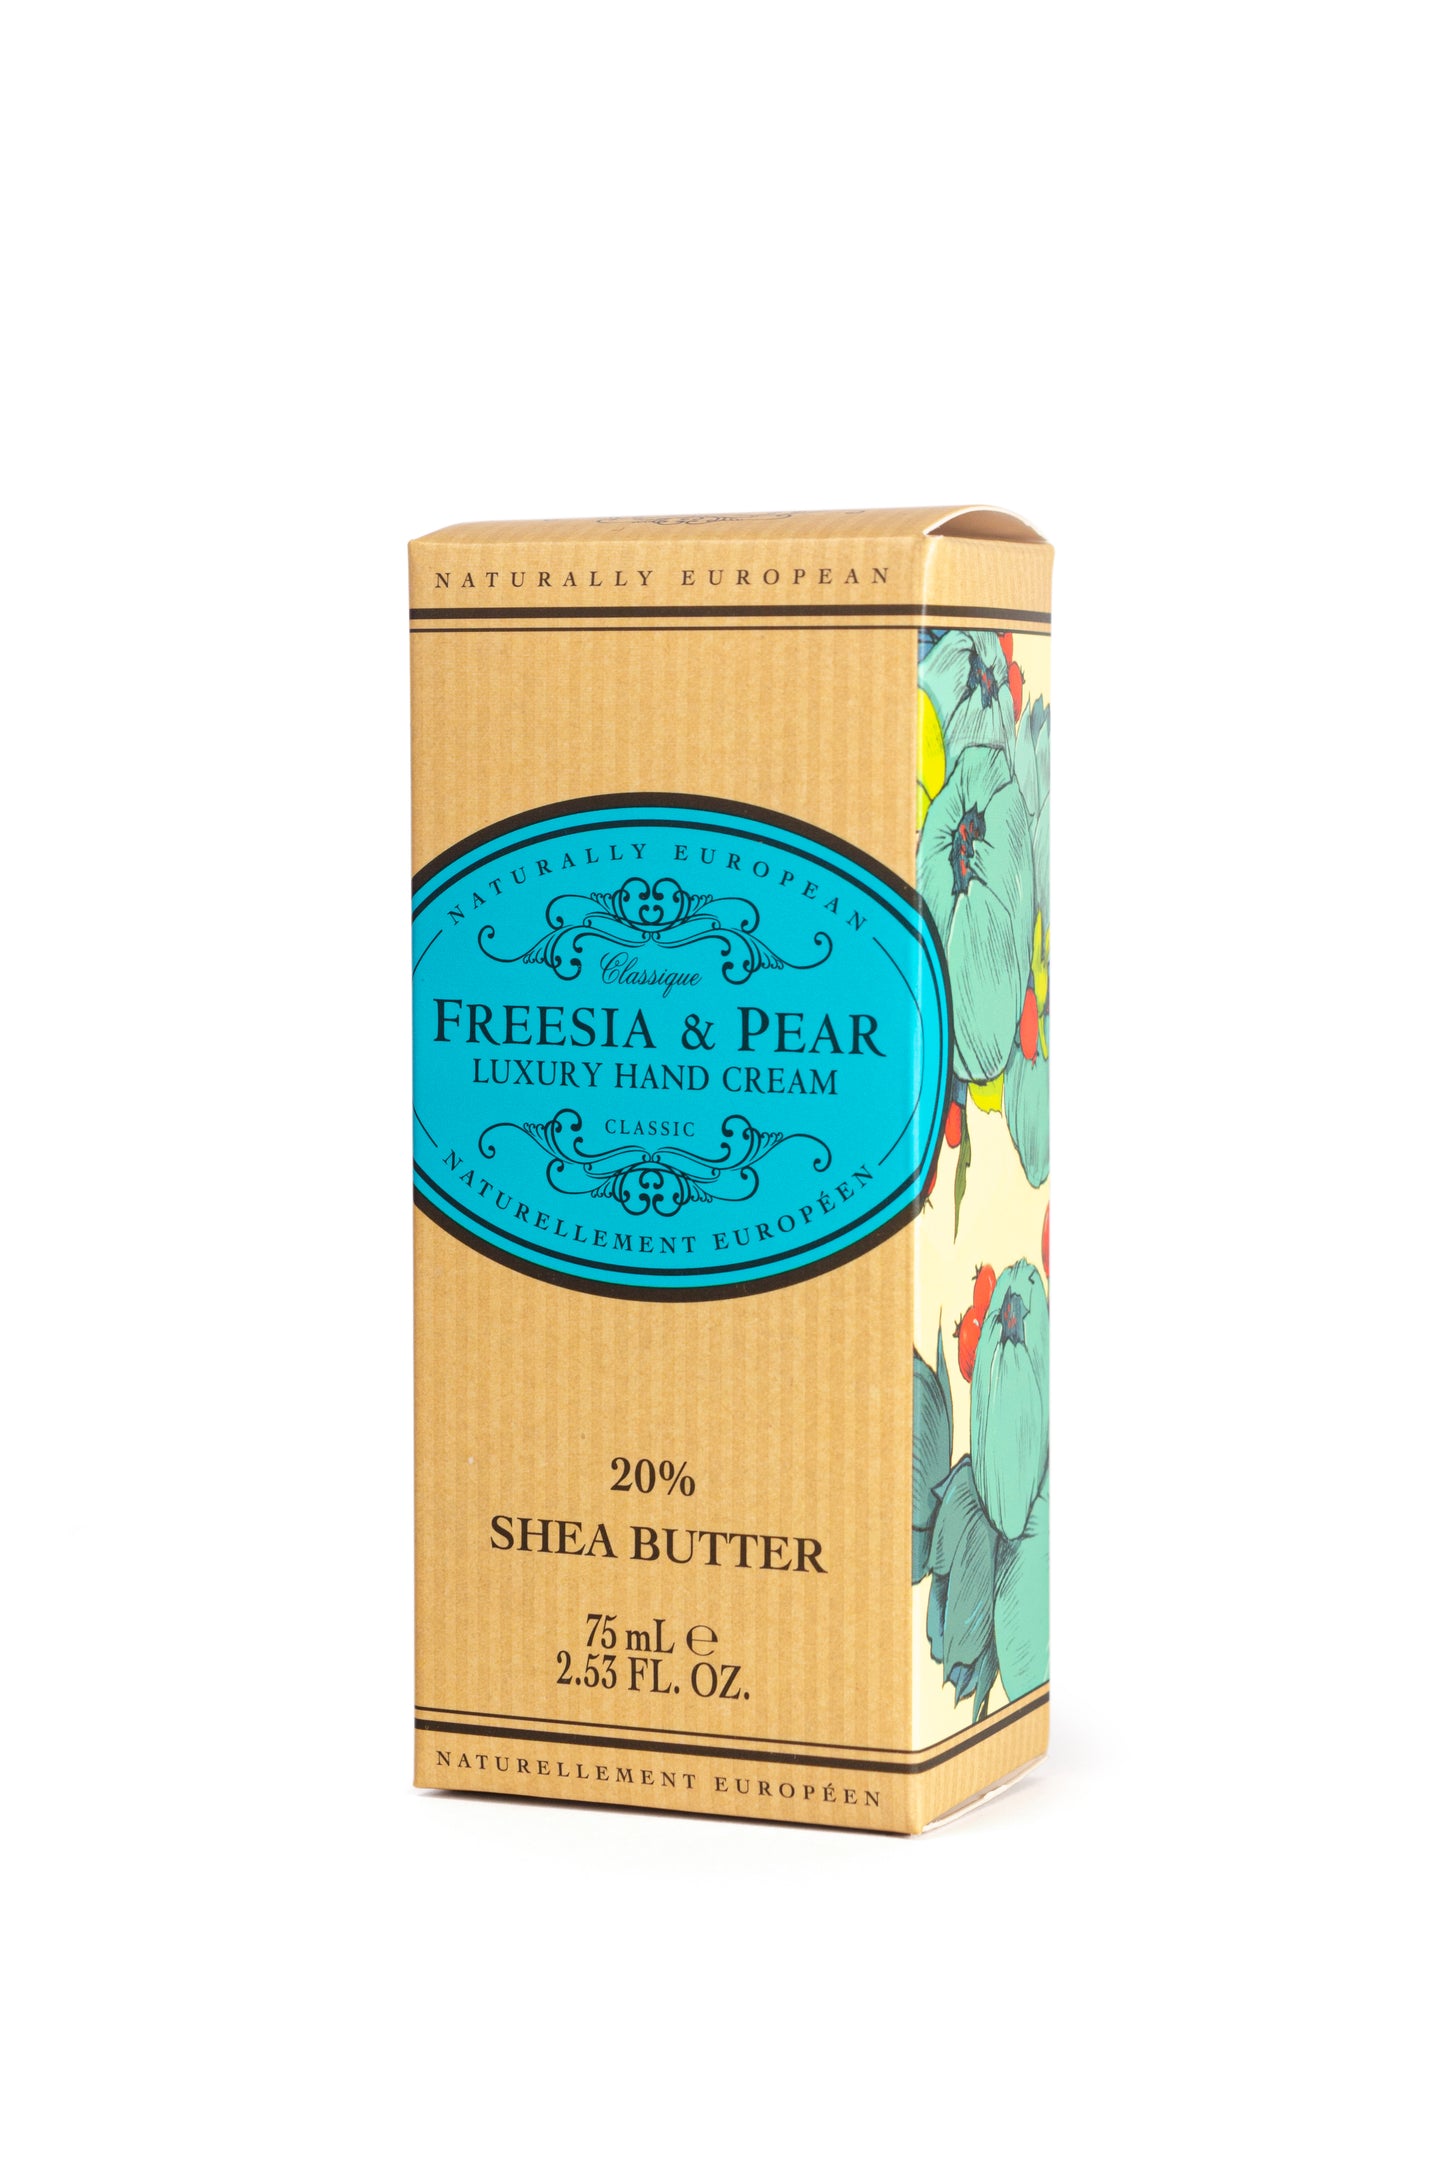 Naturally European Freesia & Pear Hand Cream 75ml